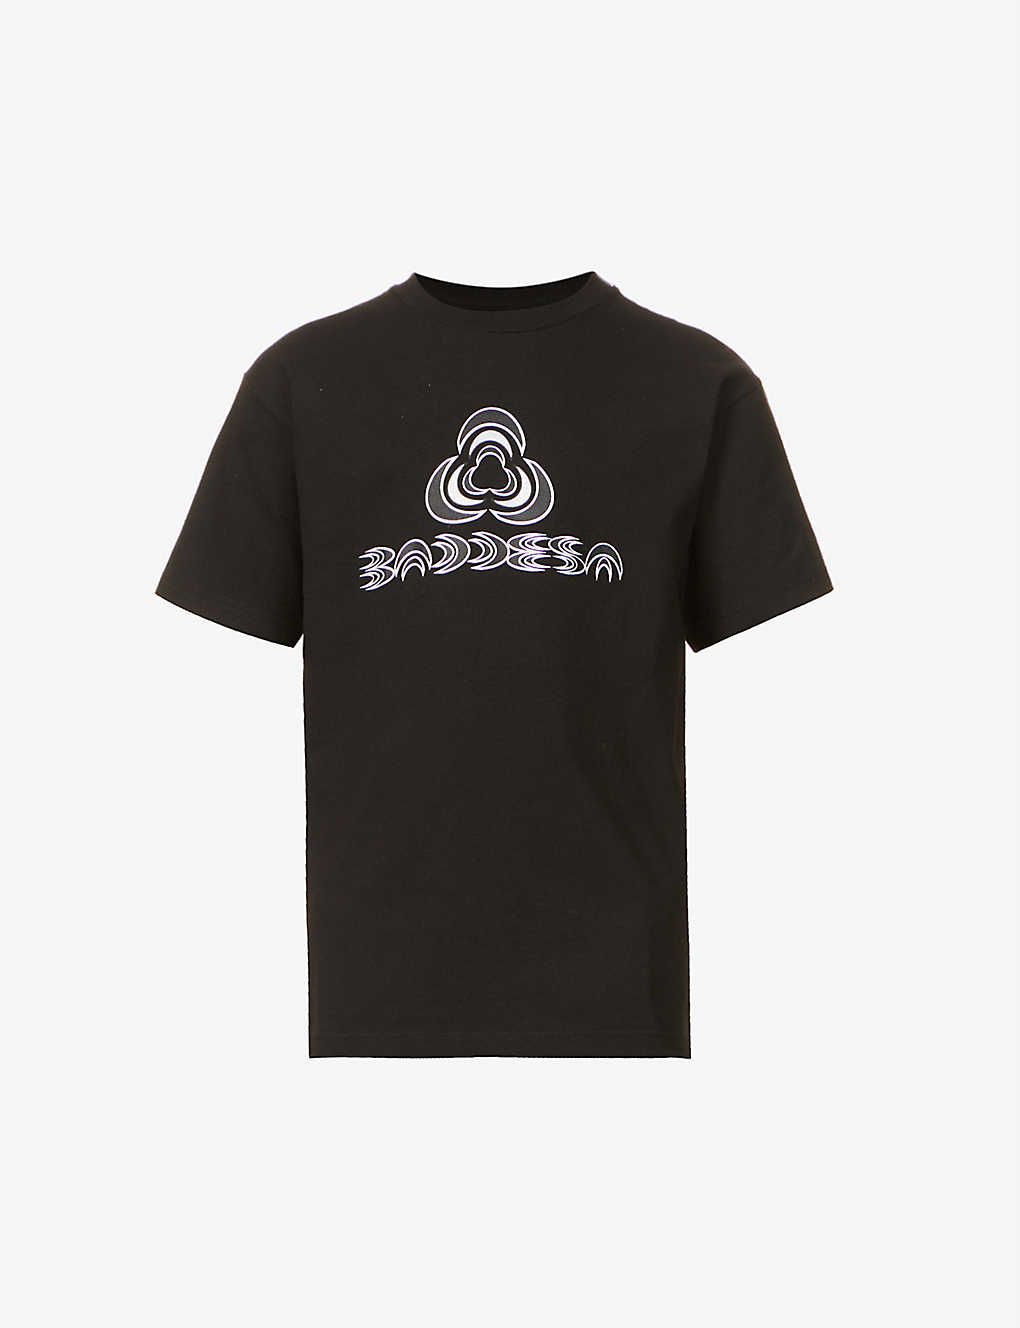 Baddest Skate Shop Branded Graphic-print Cotton-jersey T-shirt In Black